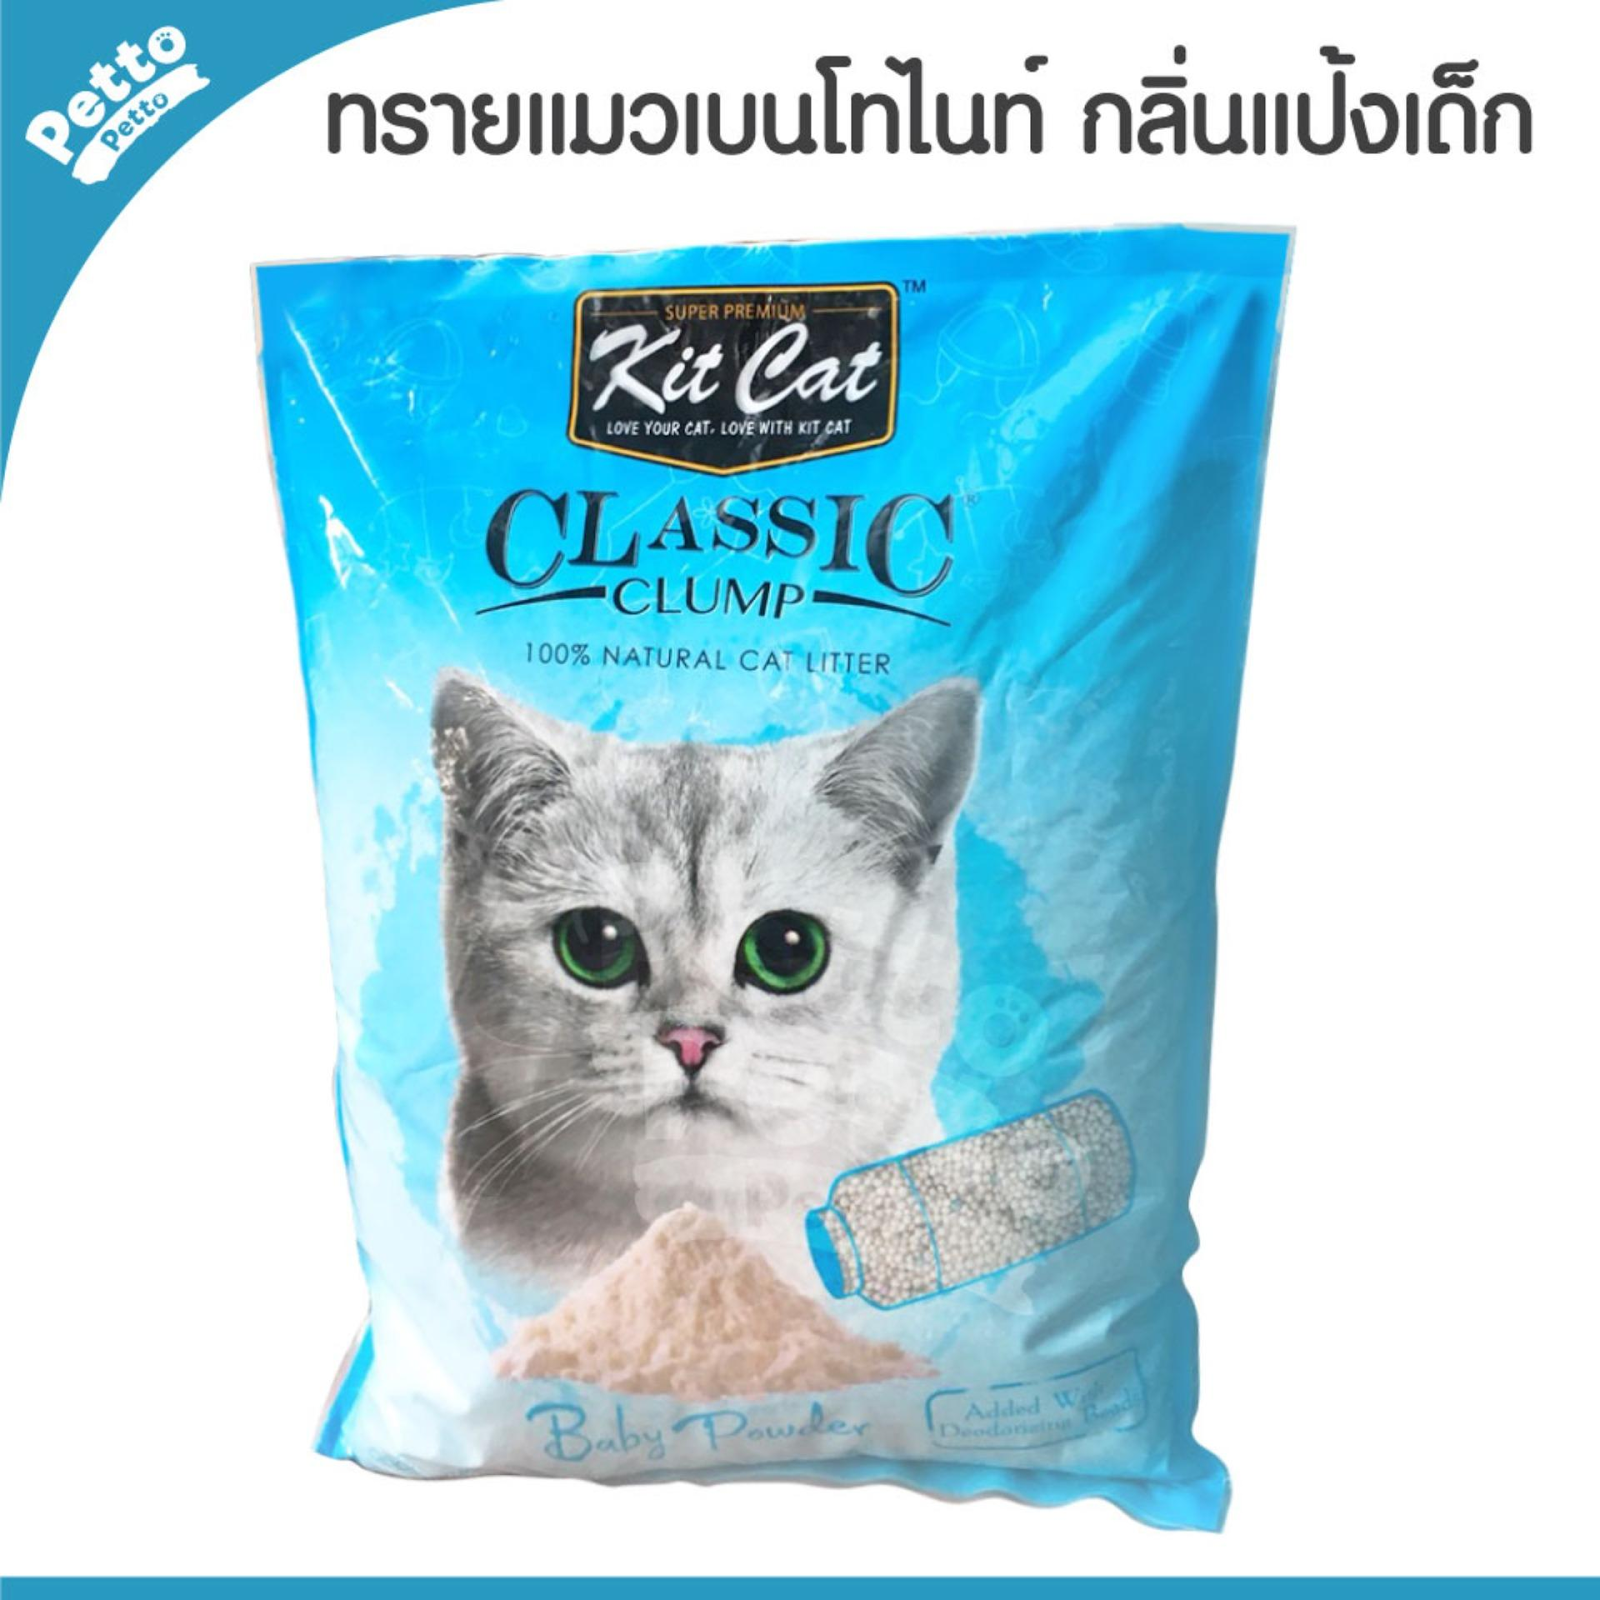 Kit Cat Classic Clump ทรายแมวที่ได้รับความนิยมกับกลิ่นหอม Baby Powder